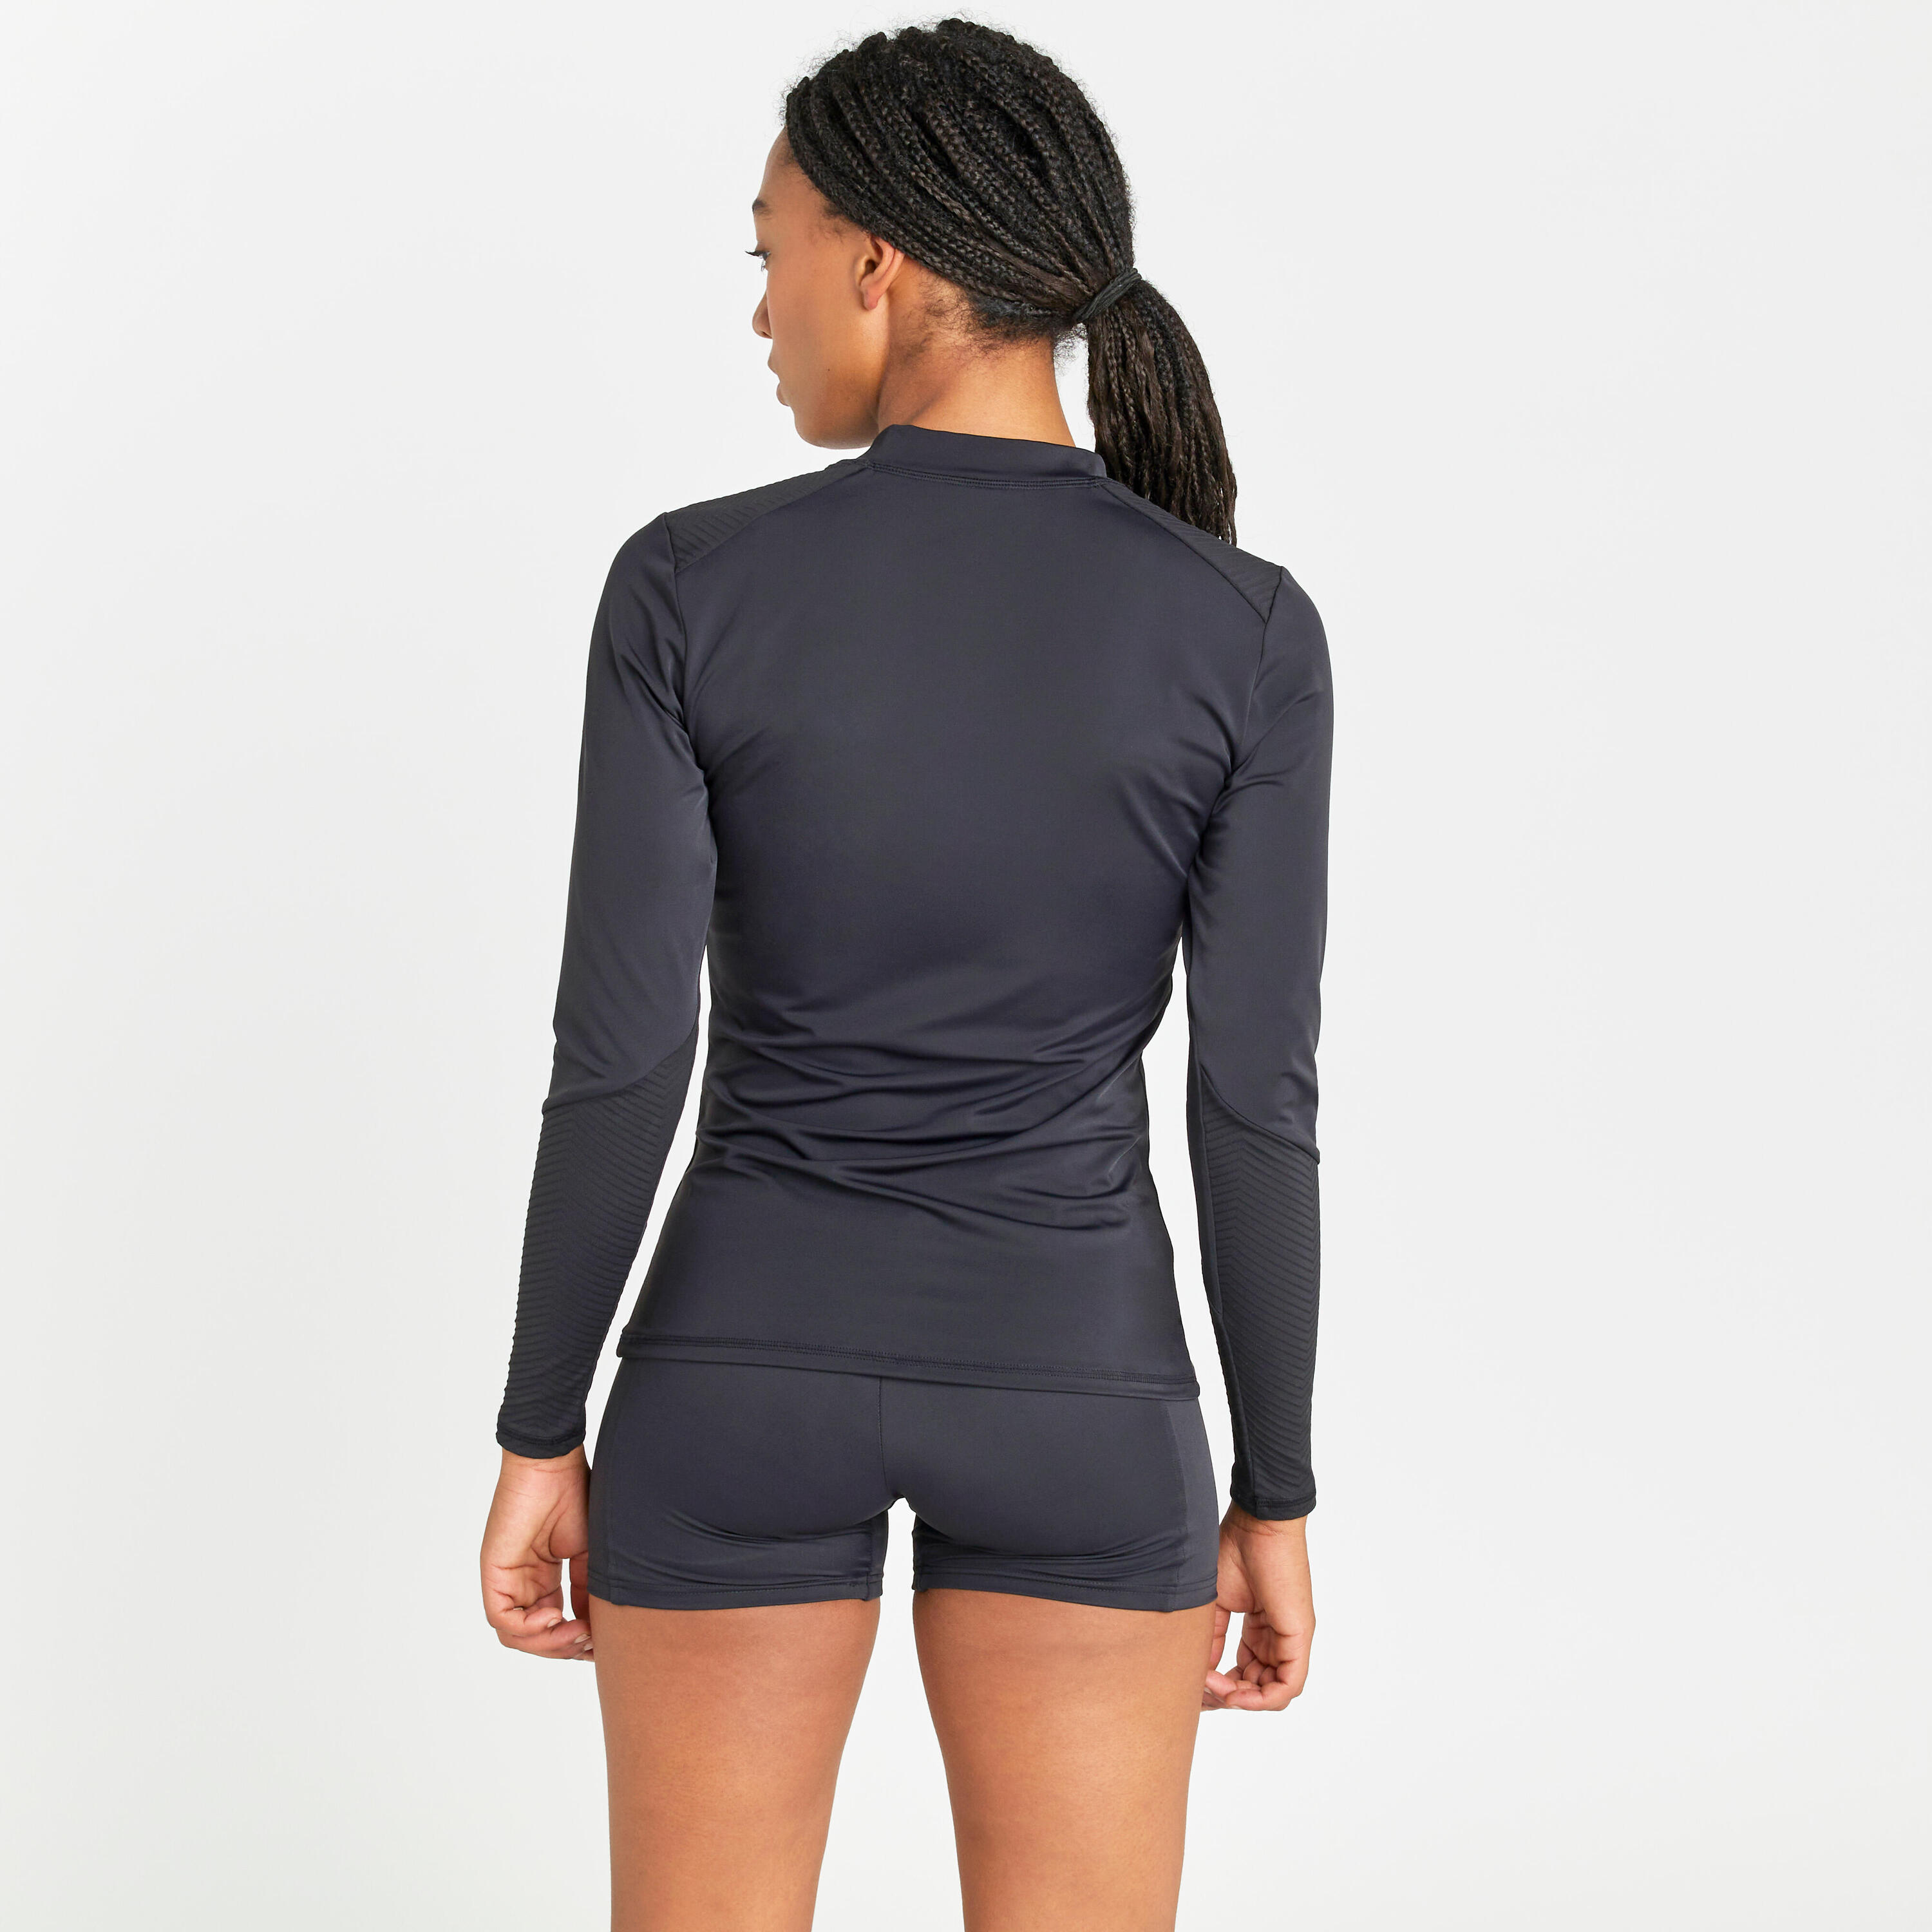 Women's Long-Sleeved Full Zip Anti-UV Top - 500 Orane Black 4/7